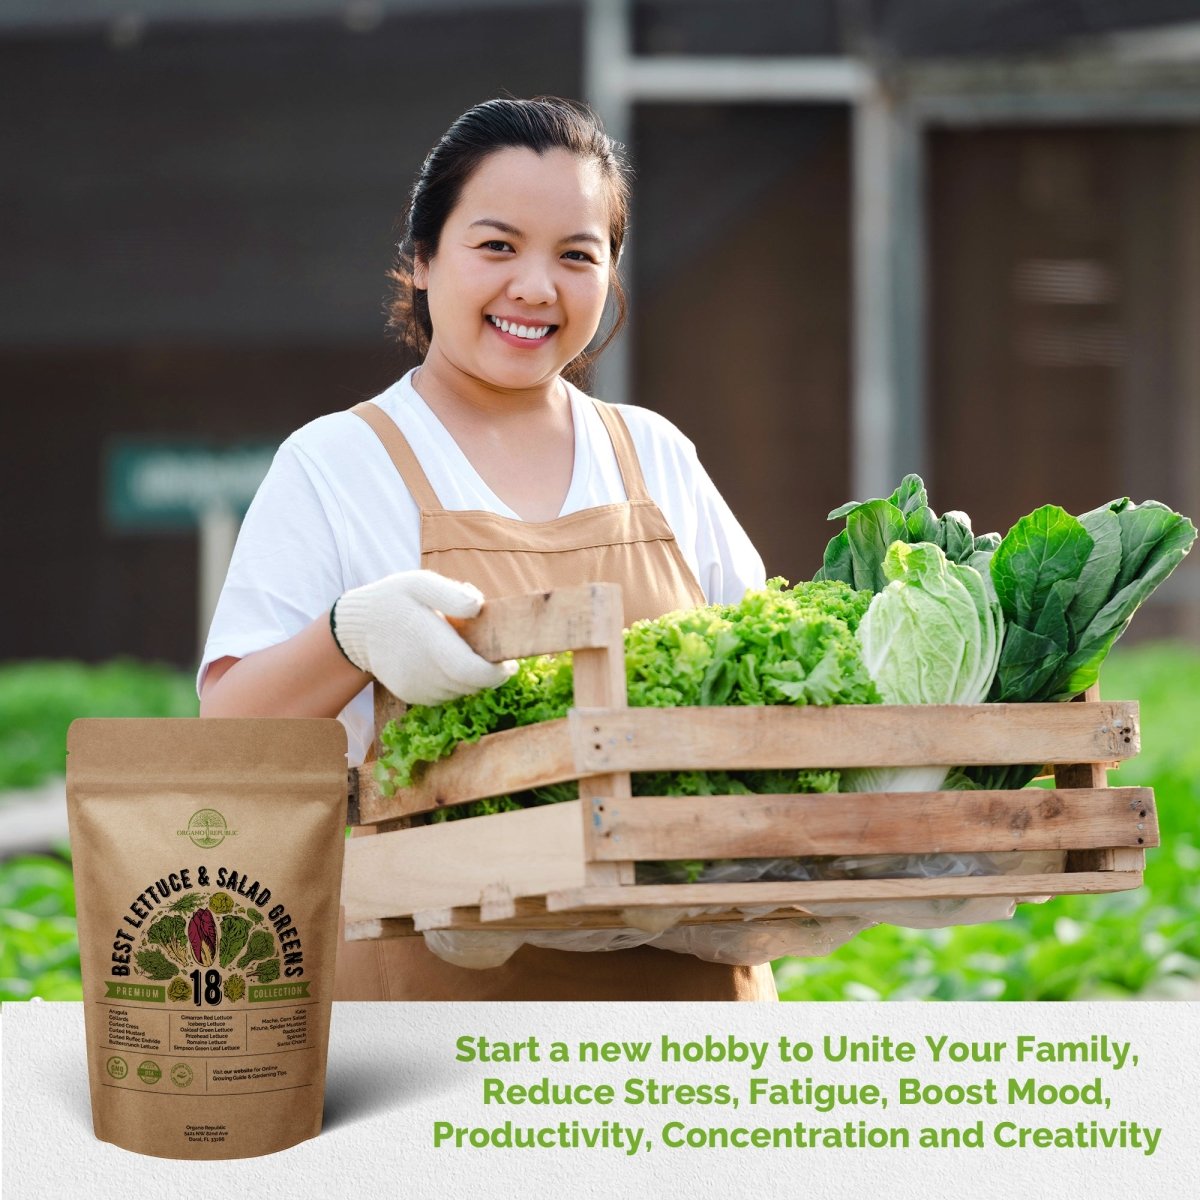 18 Lettuce & Salad Greens Seeds Variety Pack 9200+ Non-GMO Heirloom Lettuce Seeds - Organo Republic